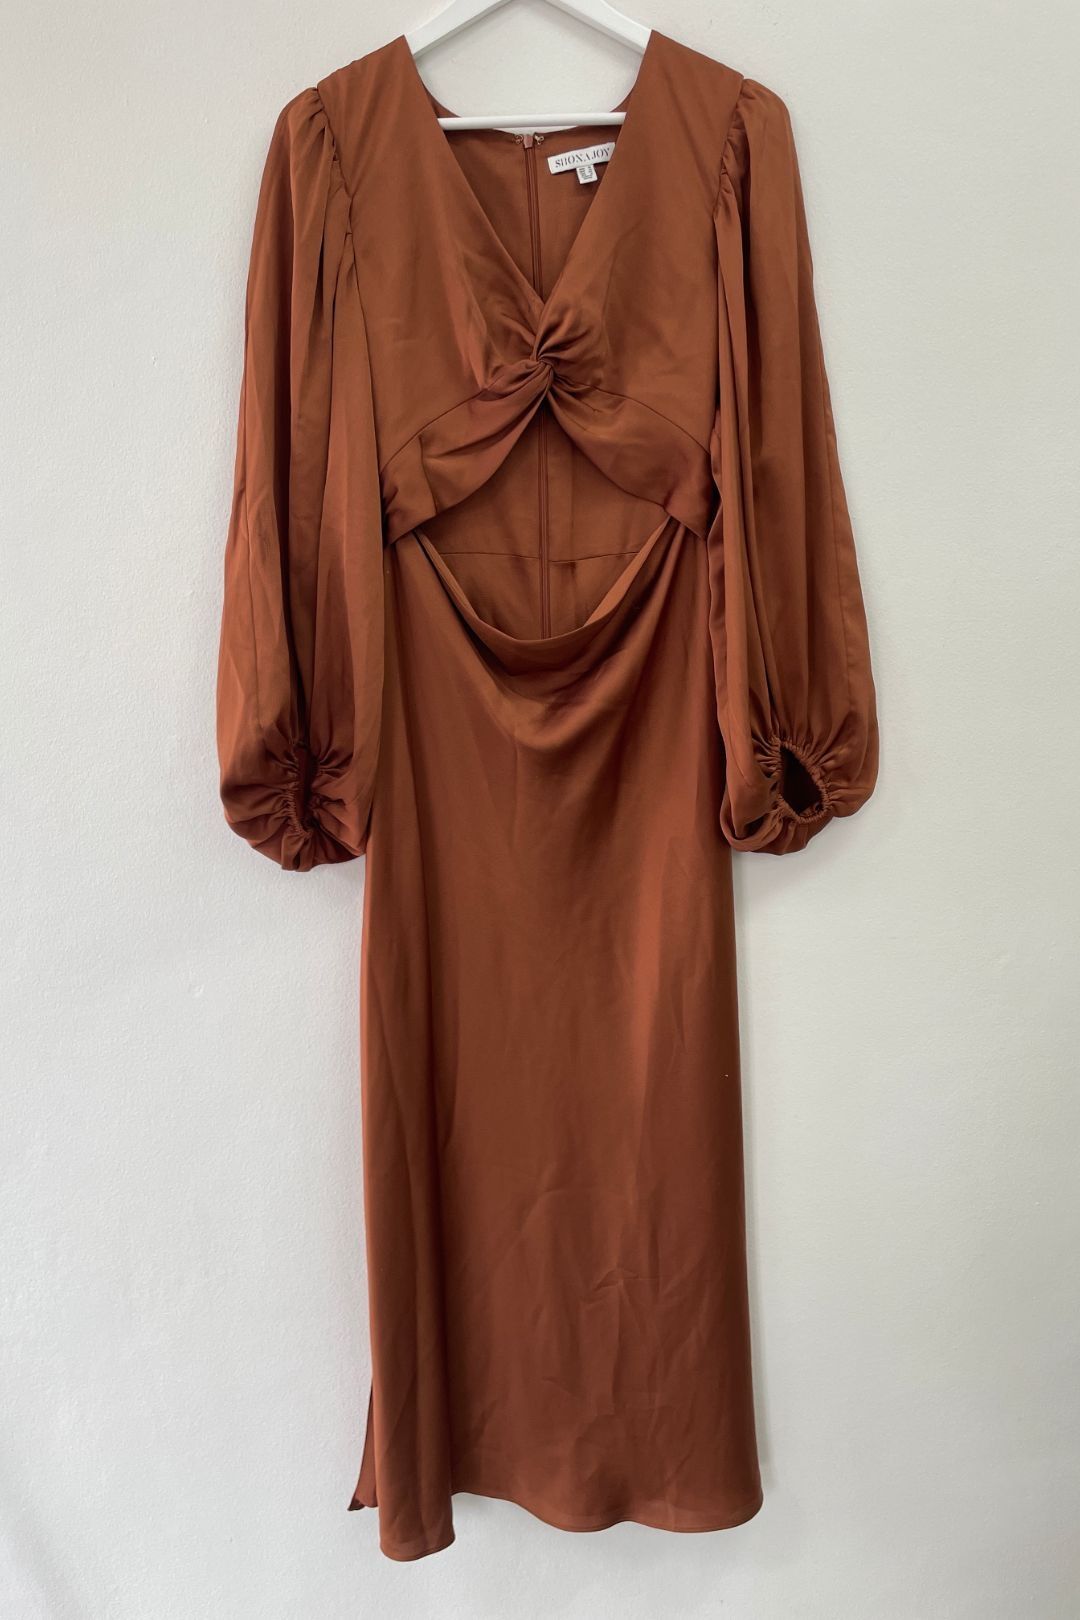 Shona Joy - Luxe Twist Front Copper Midi Dress 